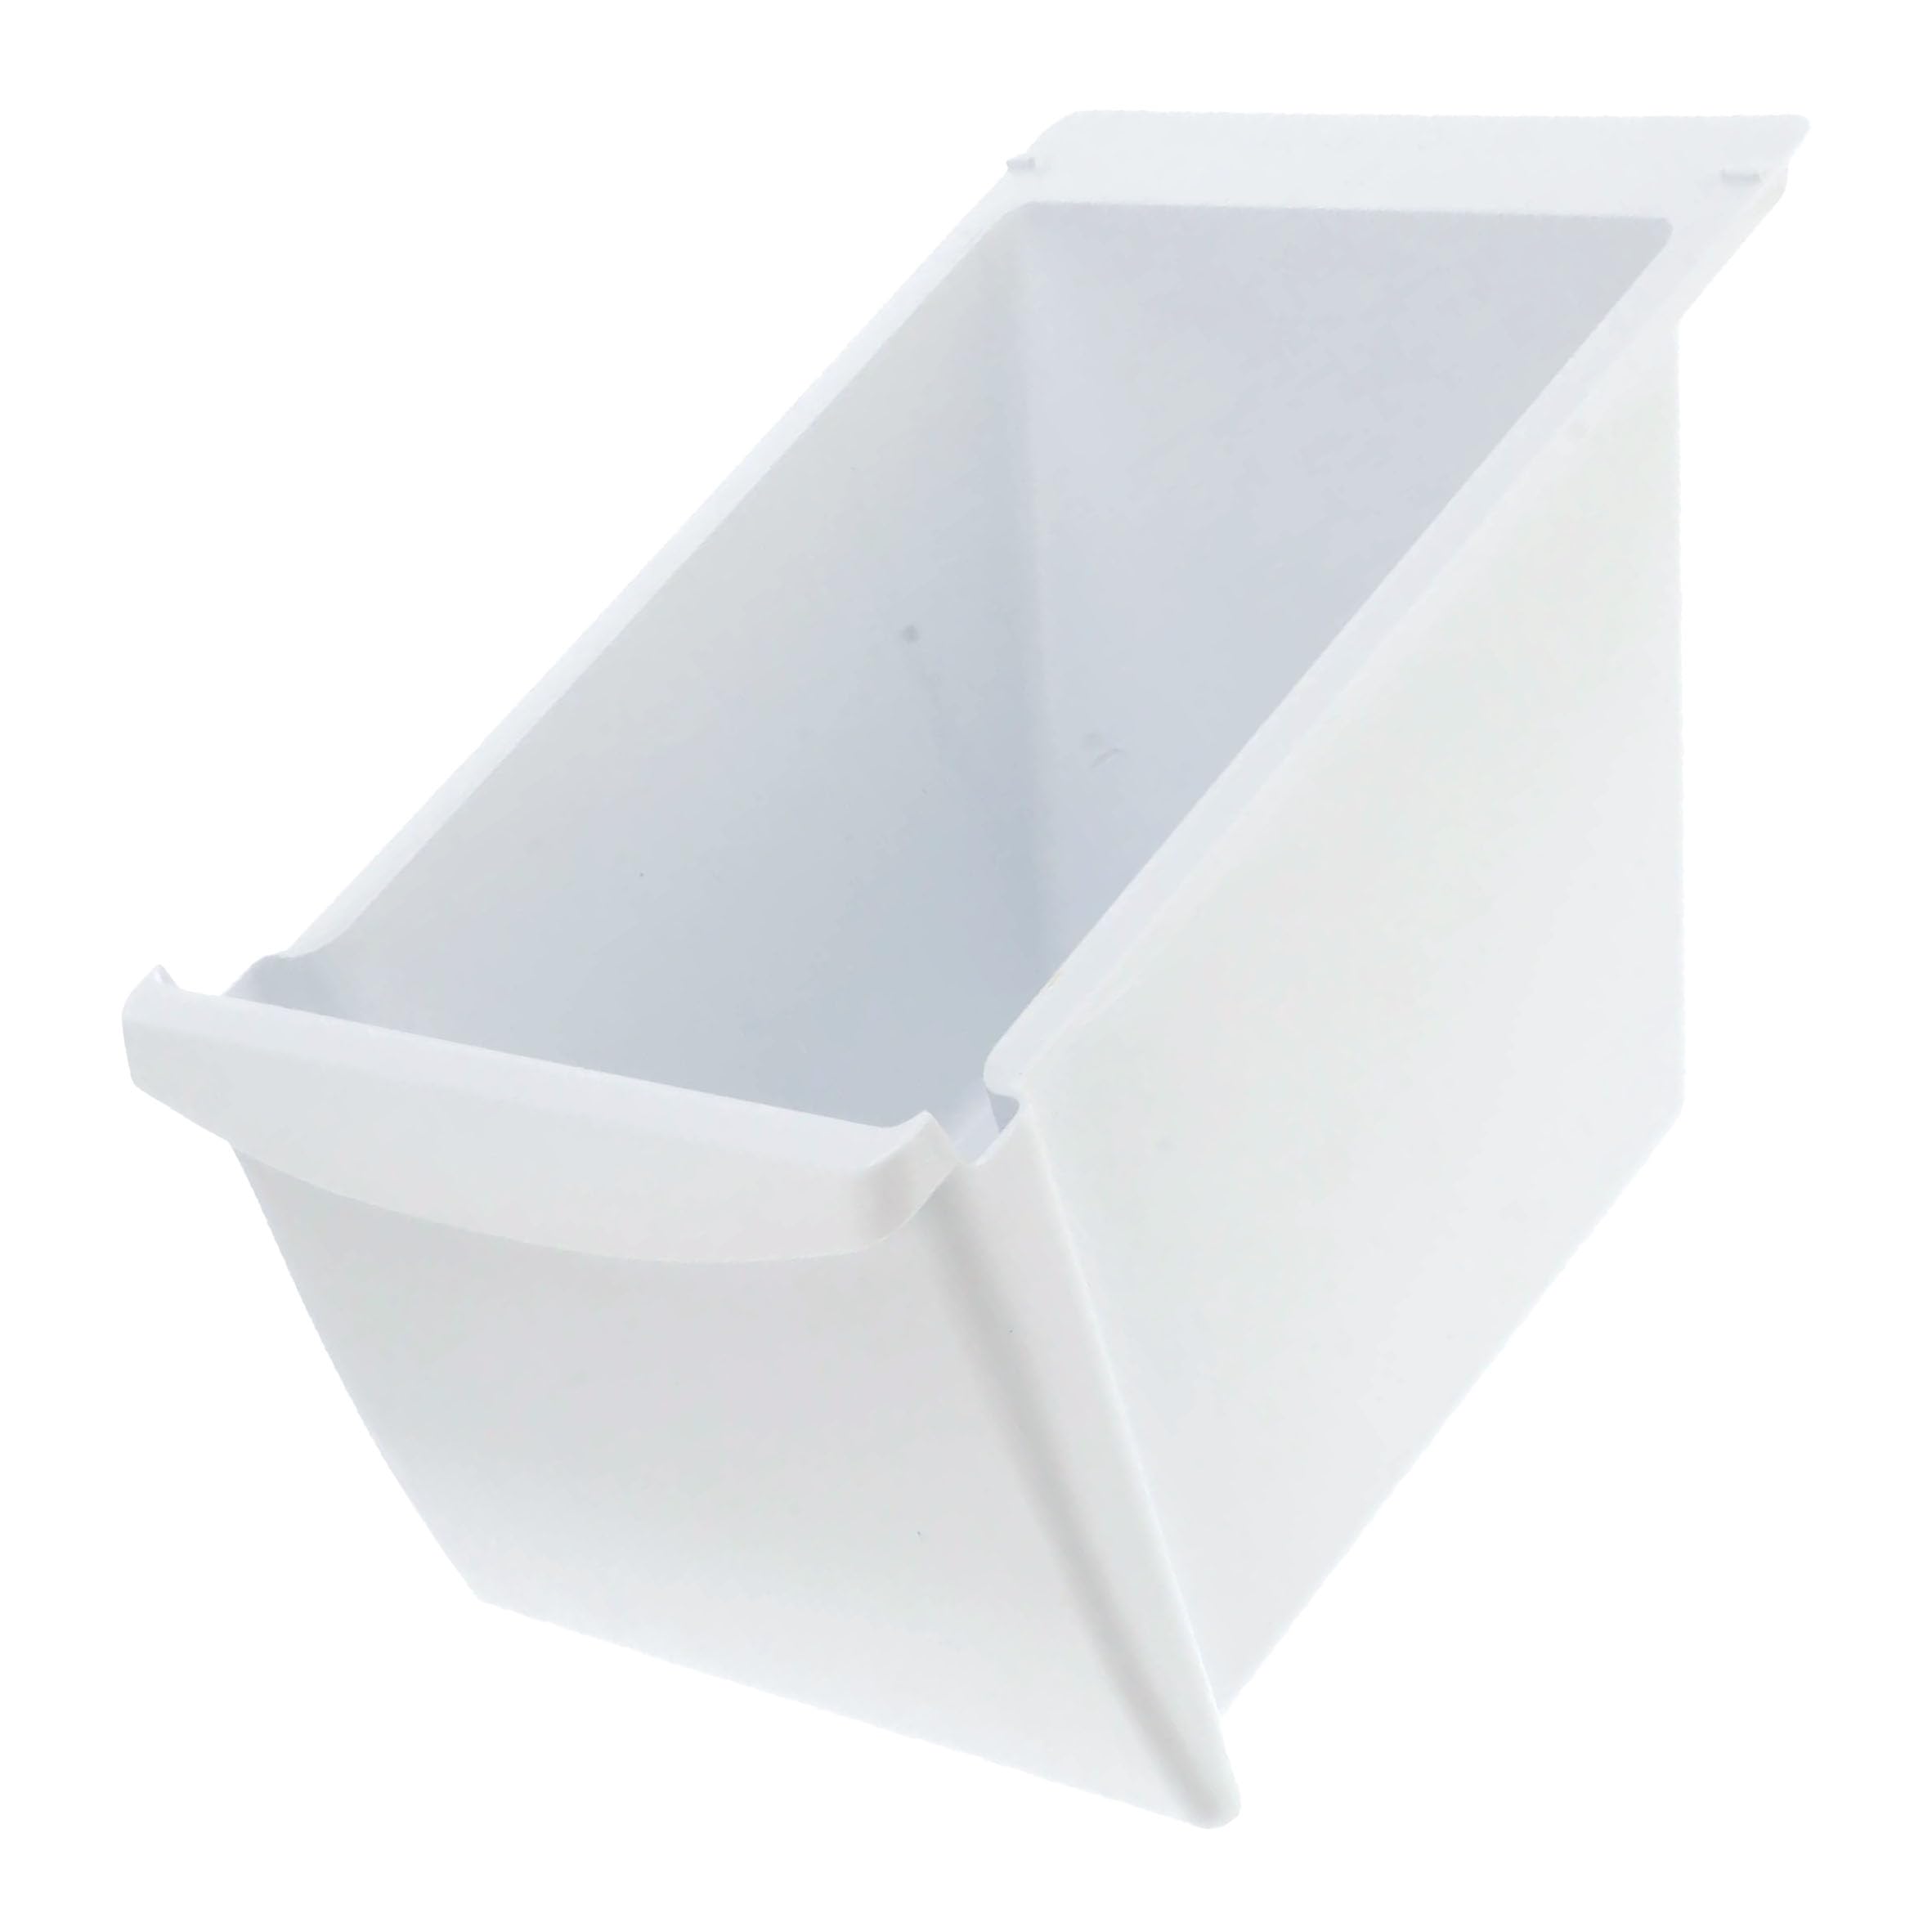 Frigidaire Refrigerator Crisper Drawer – White. Part #240364501